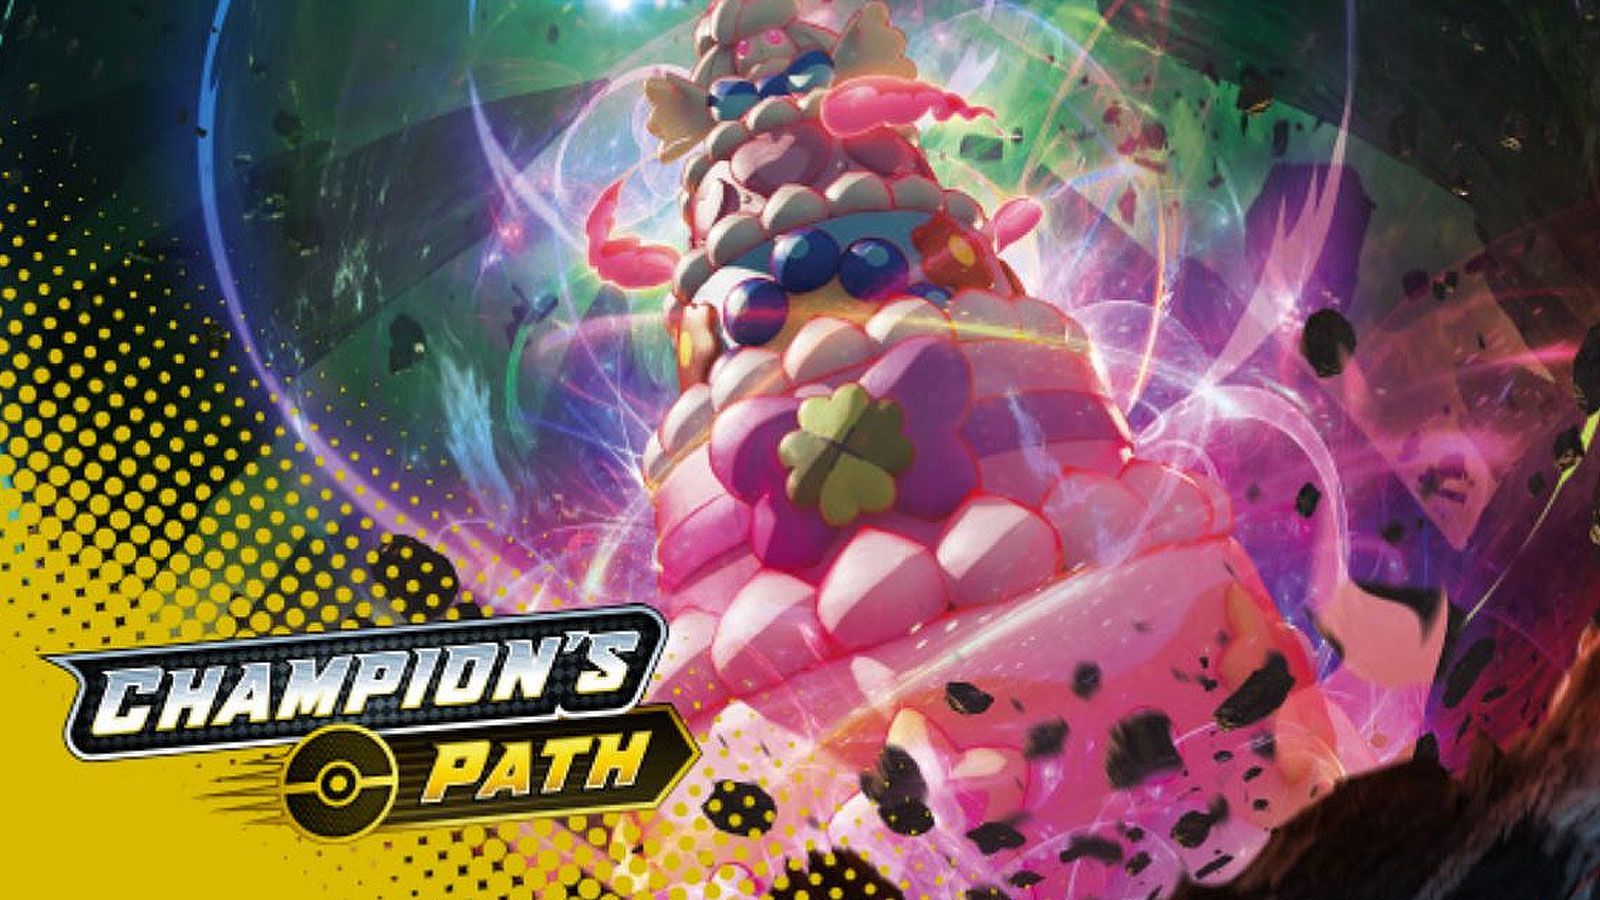 New Pokemon TCG Champion's Path expansion adds stunning Charizard V card